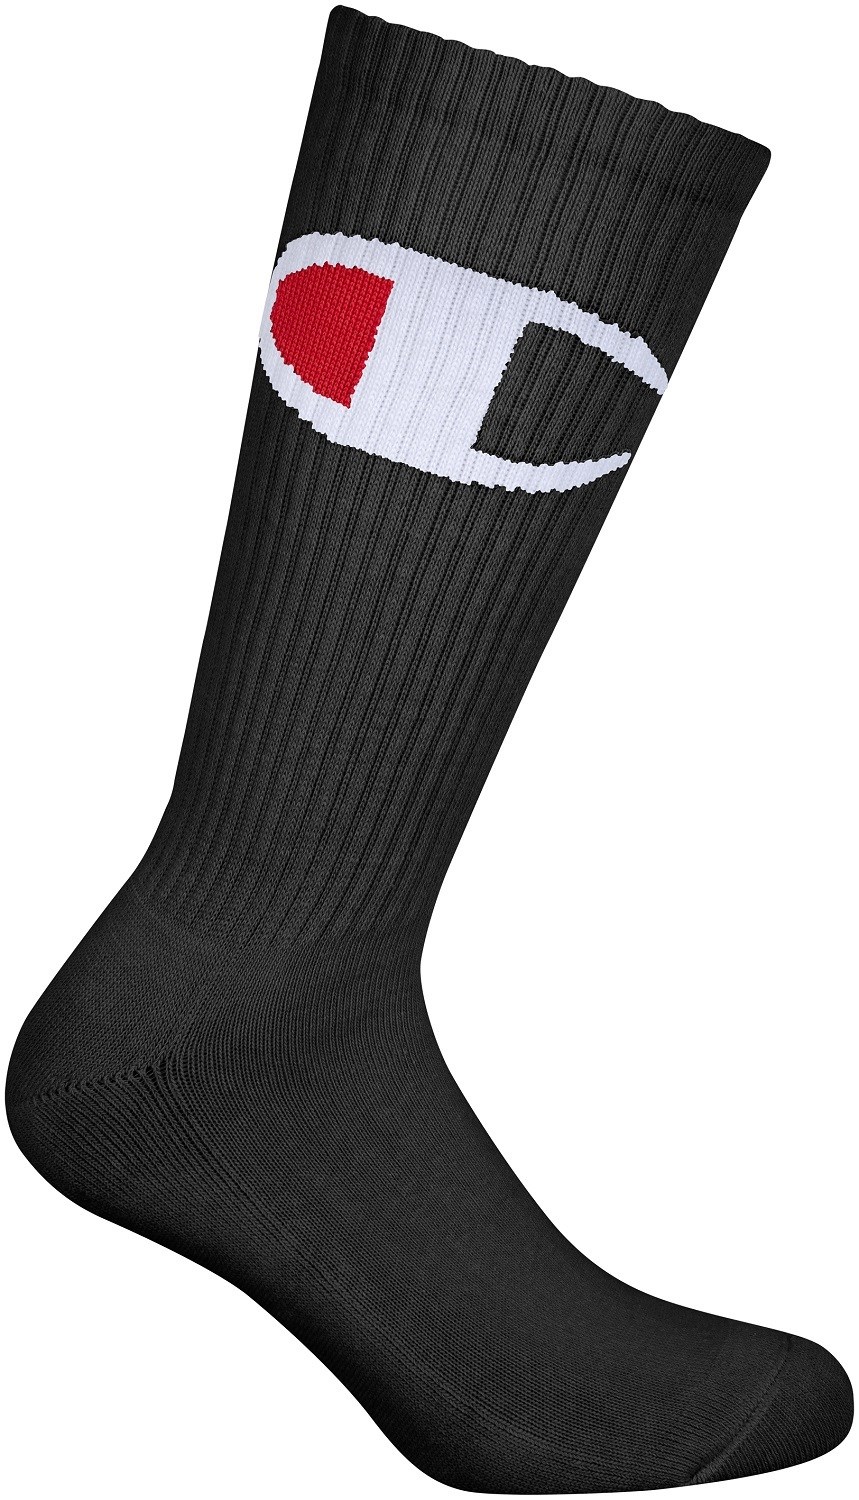 Ponožky CREW SOCKS ROCHESTER BIG C, černé